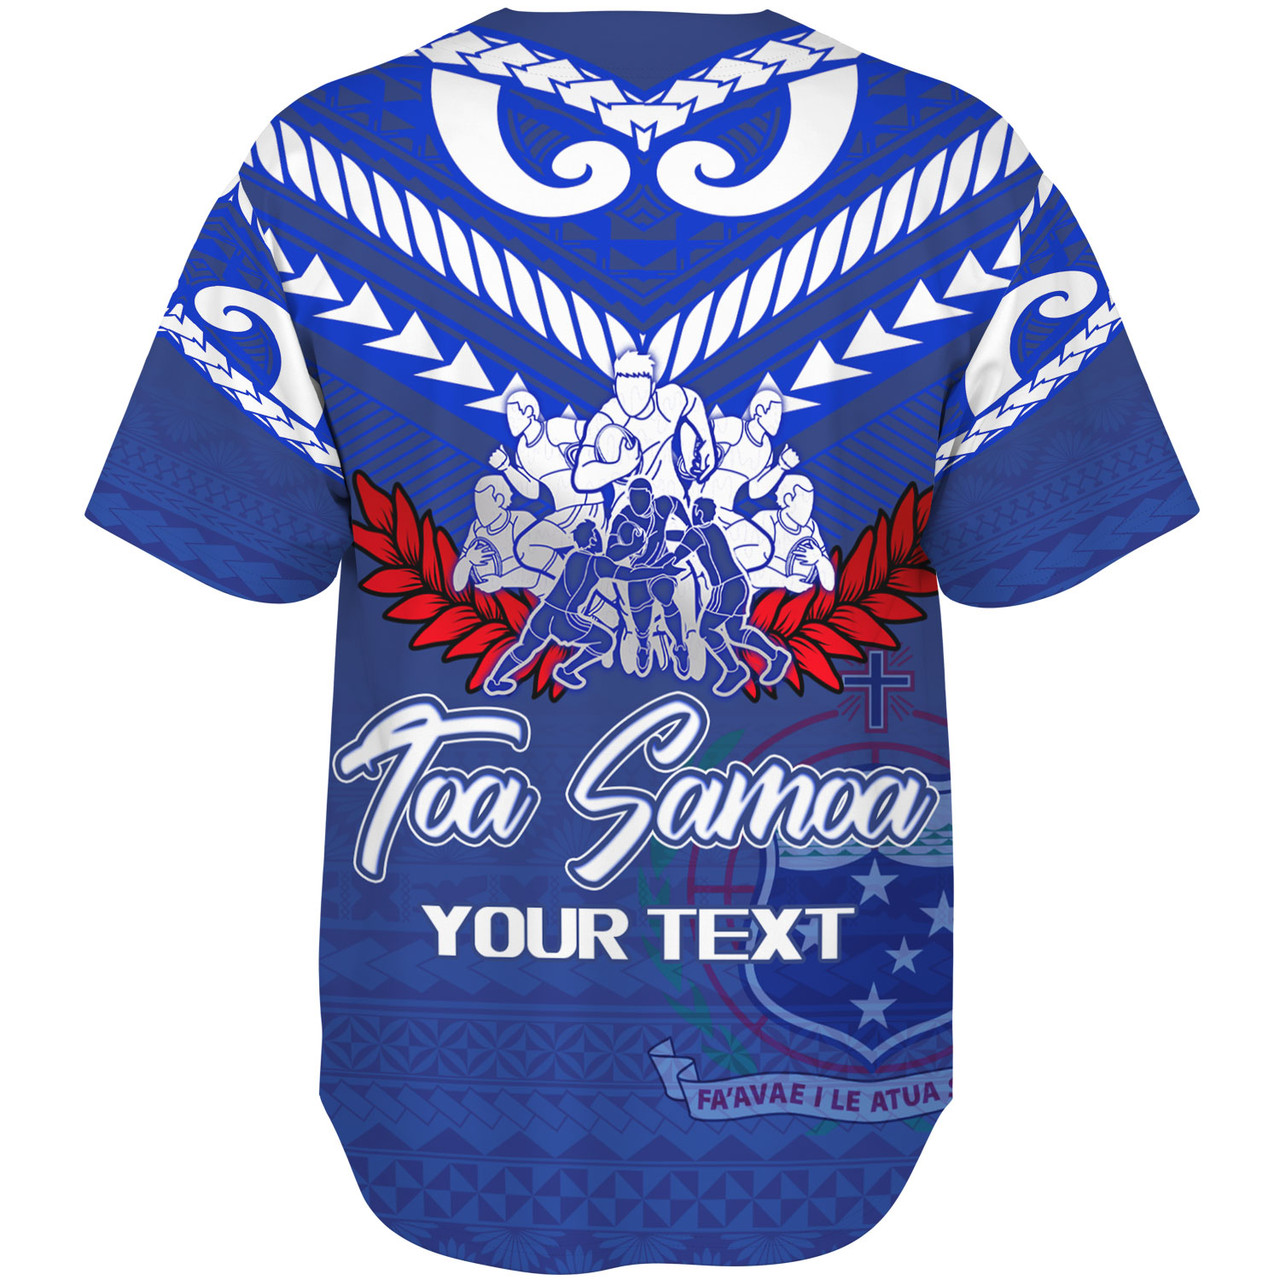 Samoa Baseball Shirt Toa Samoa Tribal Pattern